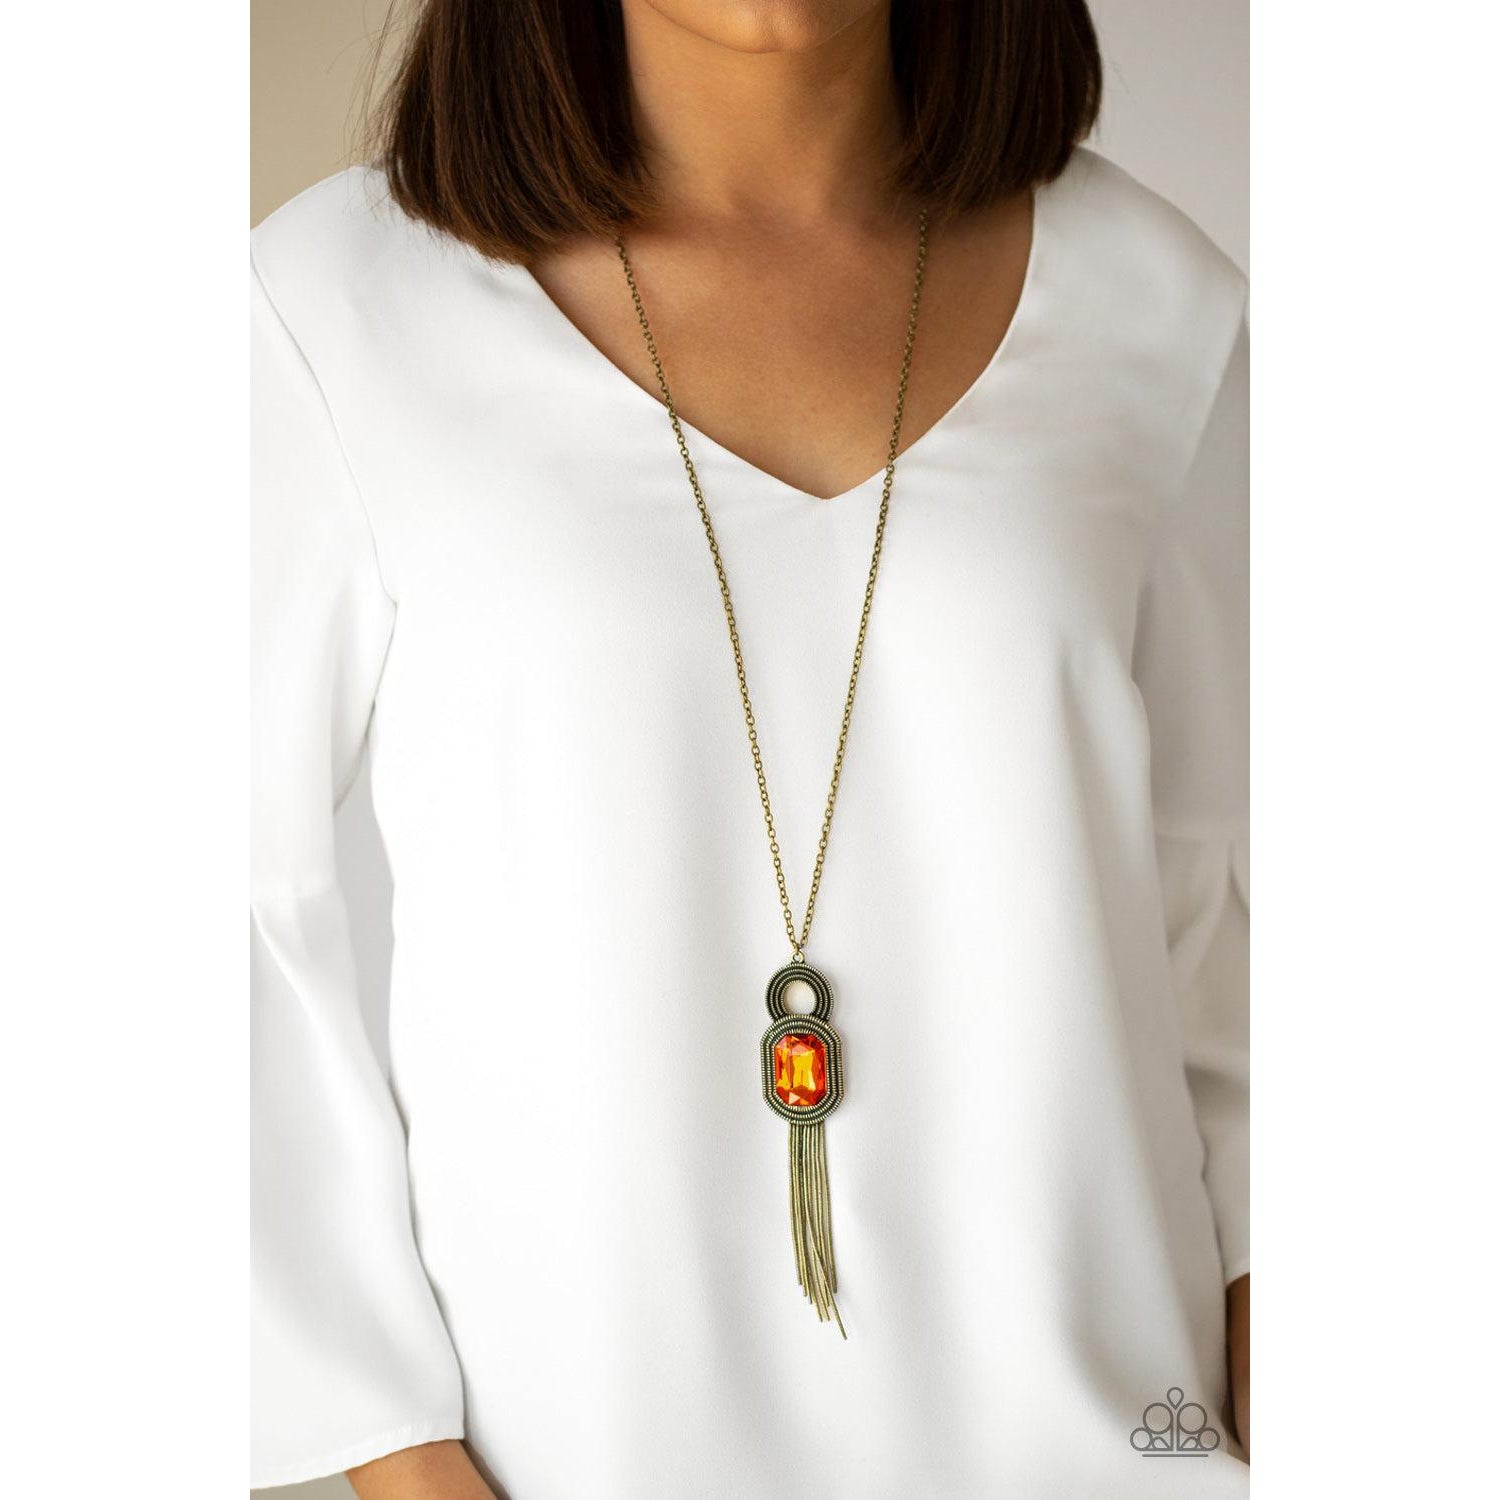 New Necklace and Earring set - Amber Orange Costume Jewelry | eBay